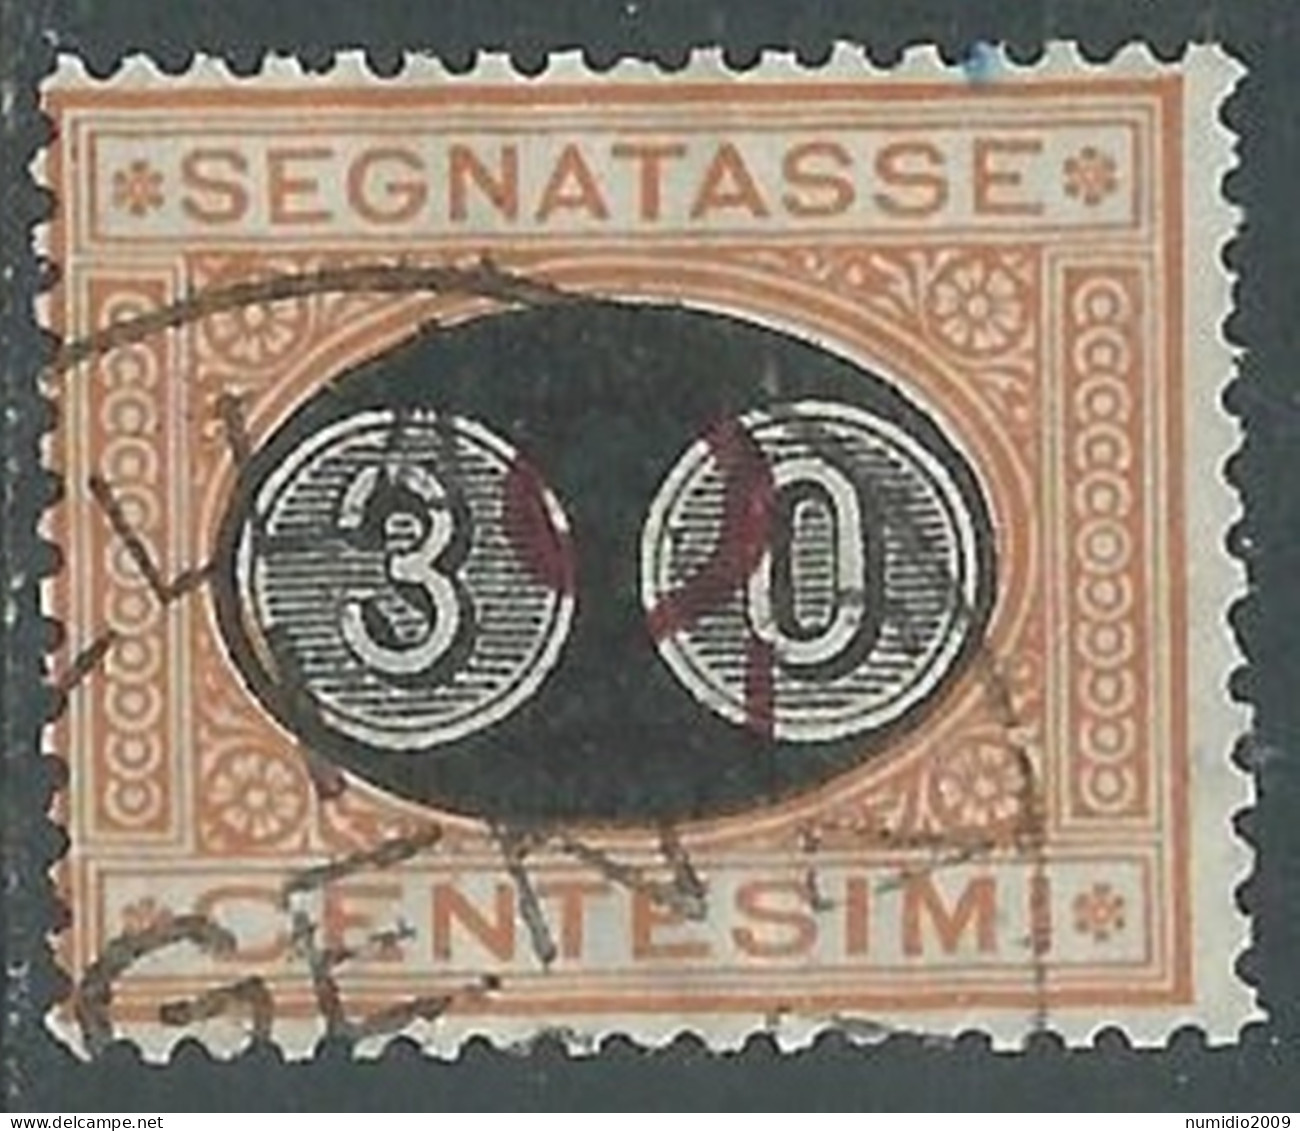 1890-91 REGNO SEGNATASSE USATO SOPRASTAMPATO 30 SU 2 CENT - P13 - Segnatasse